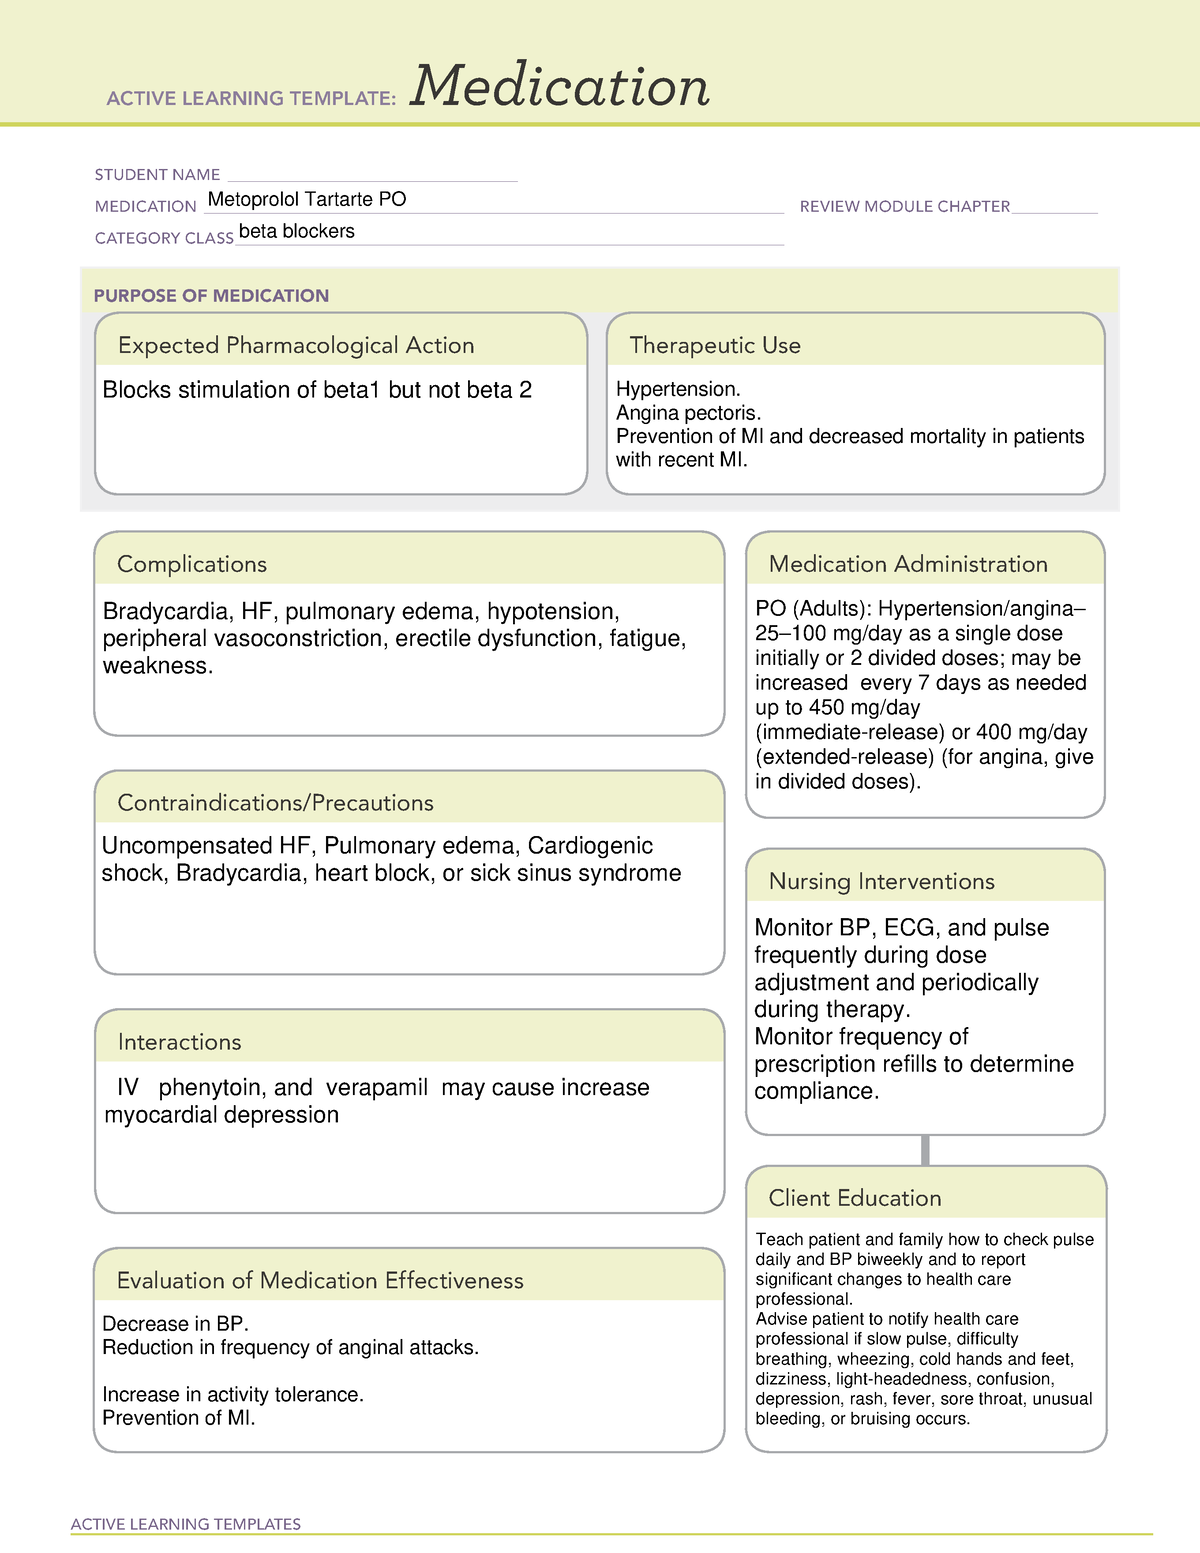 Metoprololsd ATI active learning template medication Metoprolol